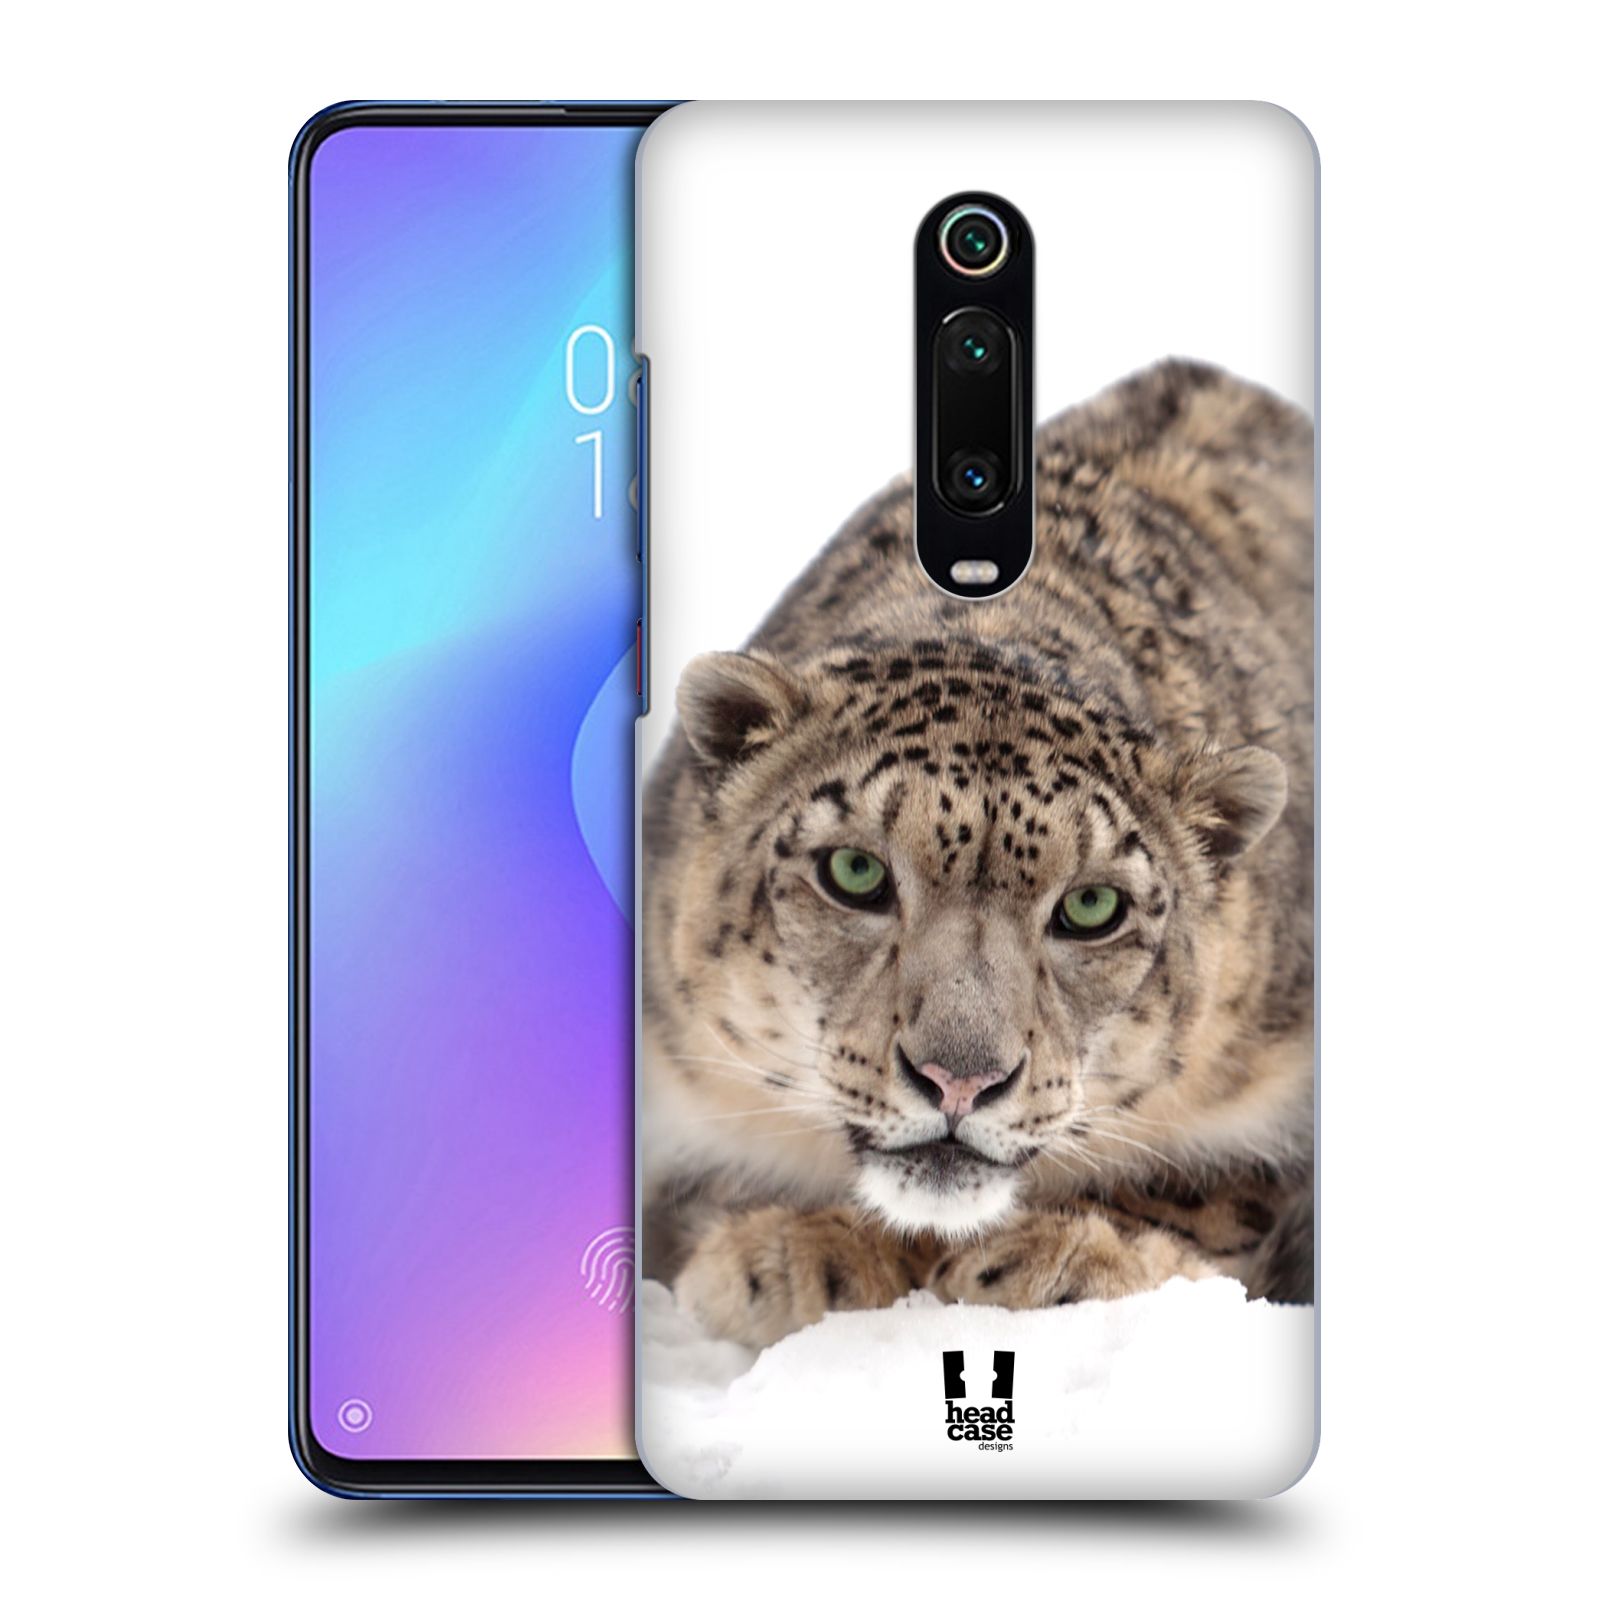 Pouzdro na mobil Xiaomi Mi 9T PRO - HEAD CASE - vzor Divočina, Divoký život a zvířata foto SNĚŽNÝ LEOPARD